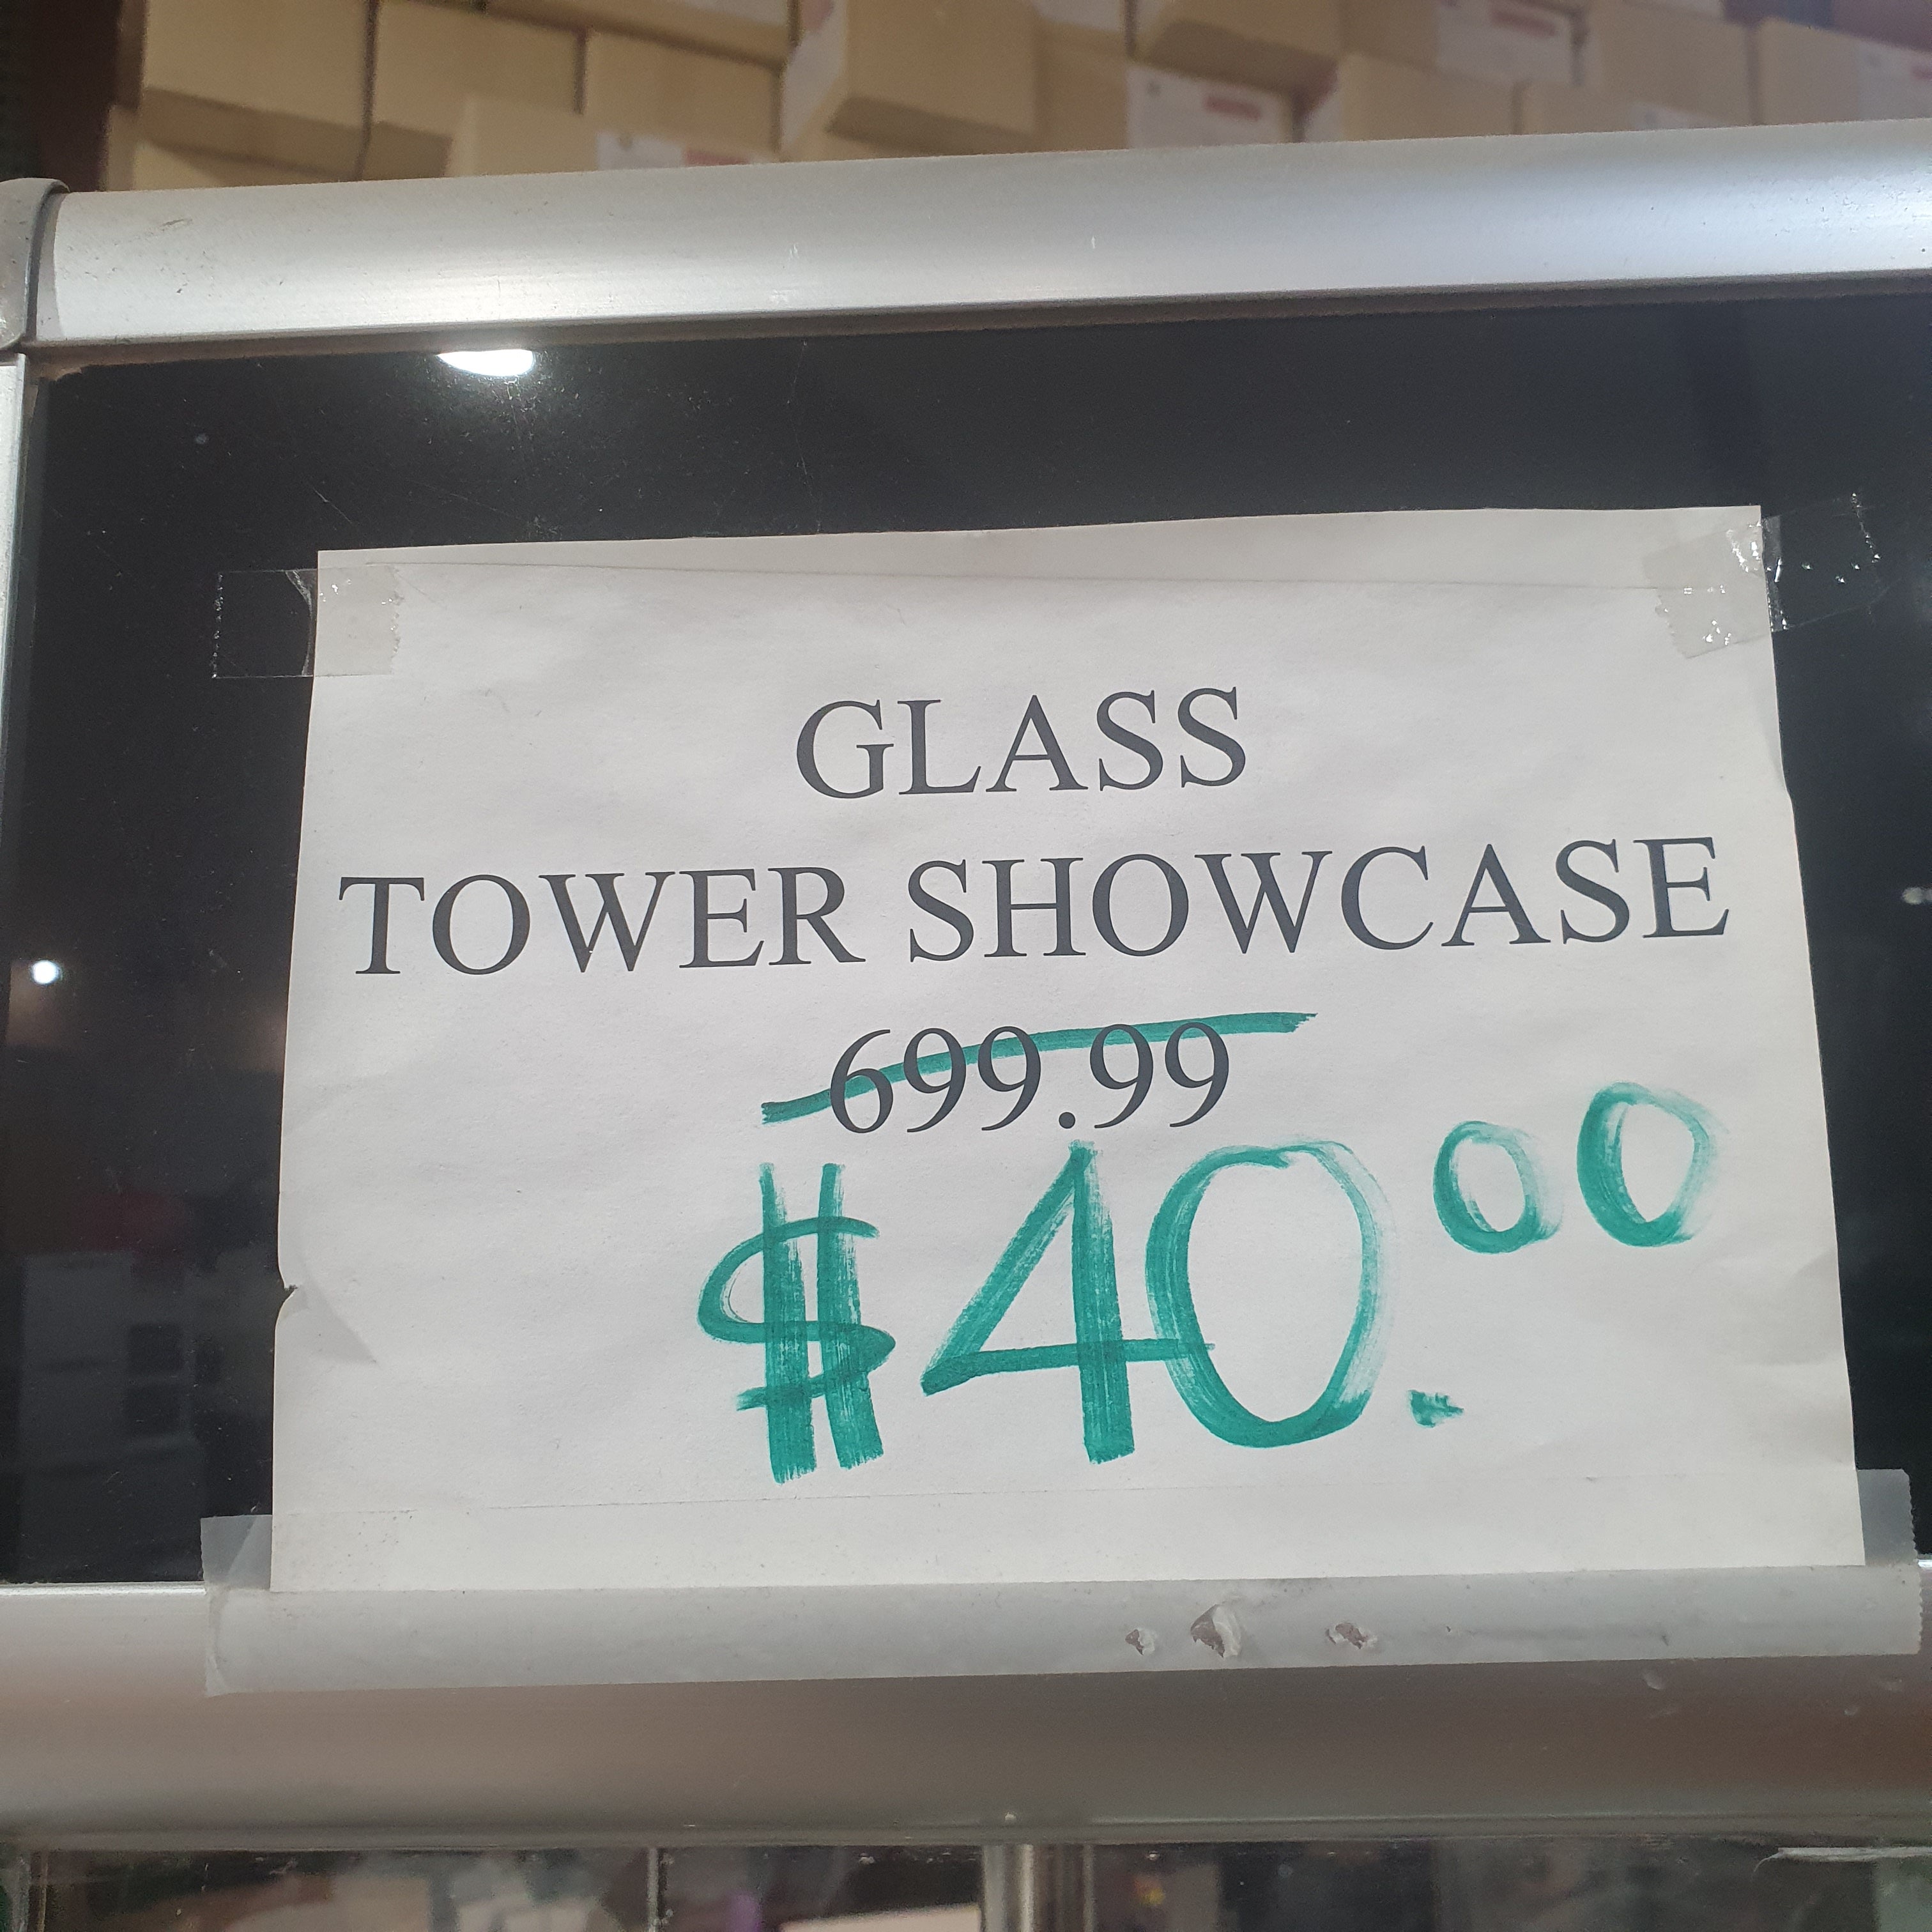 CHI GLSHOCS GLASS TOWER SHOWCASE